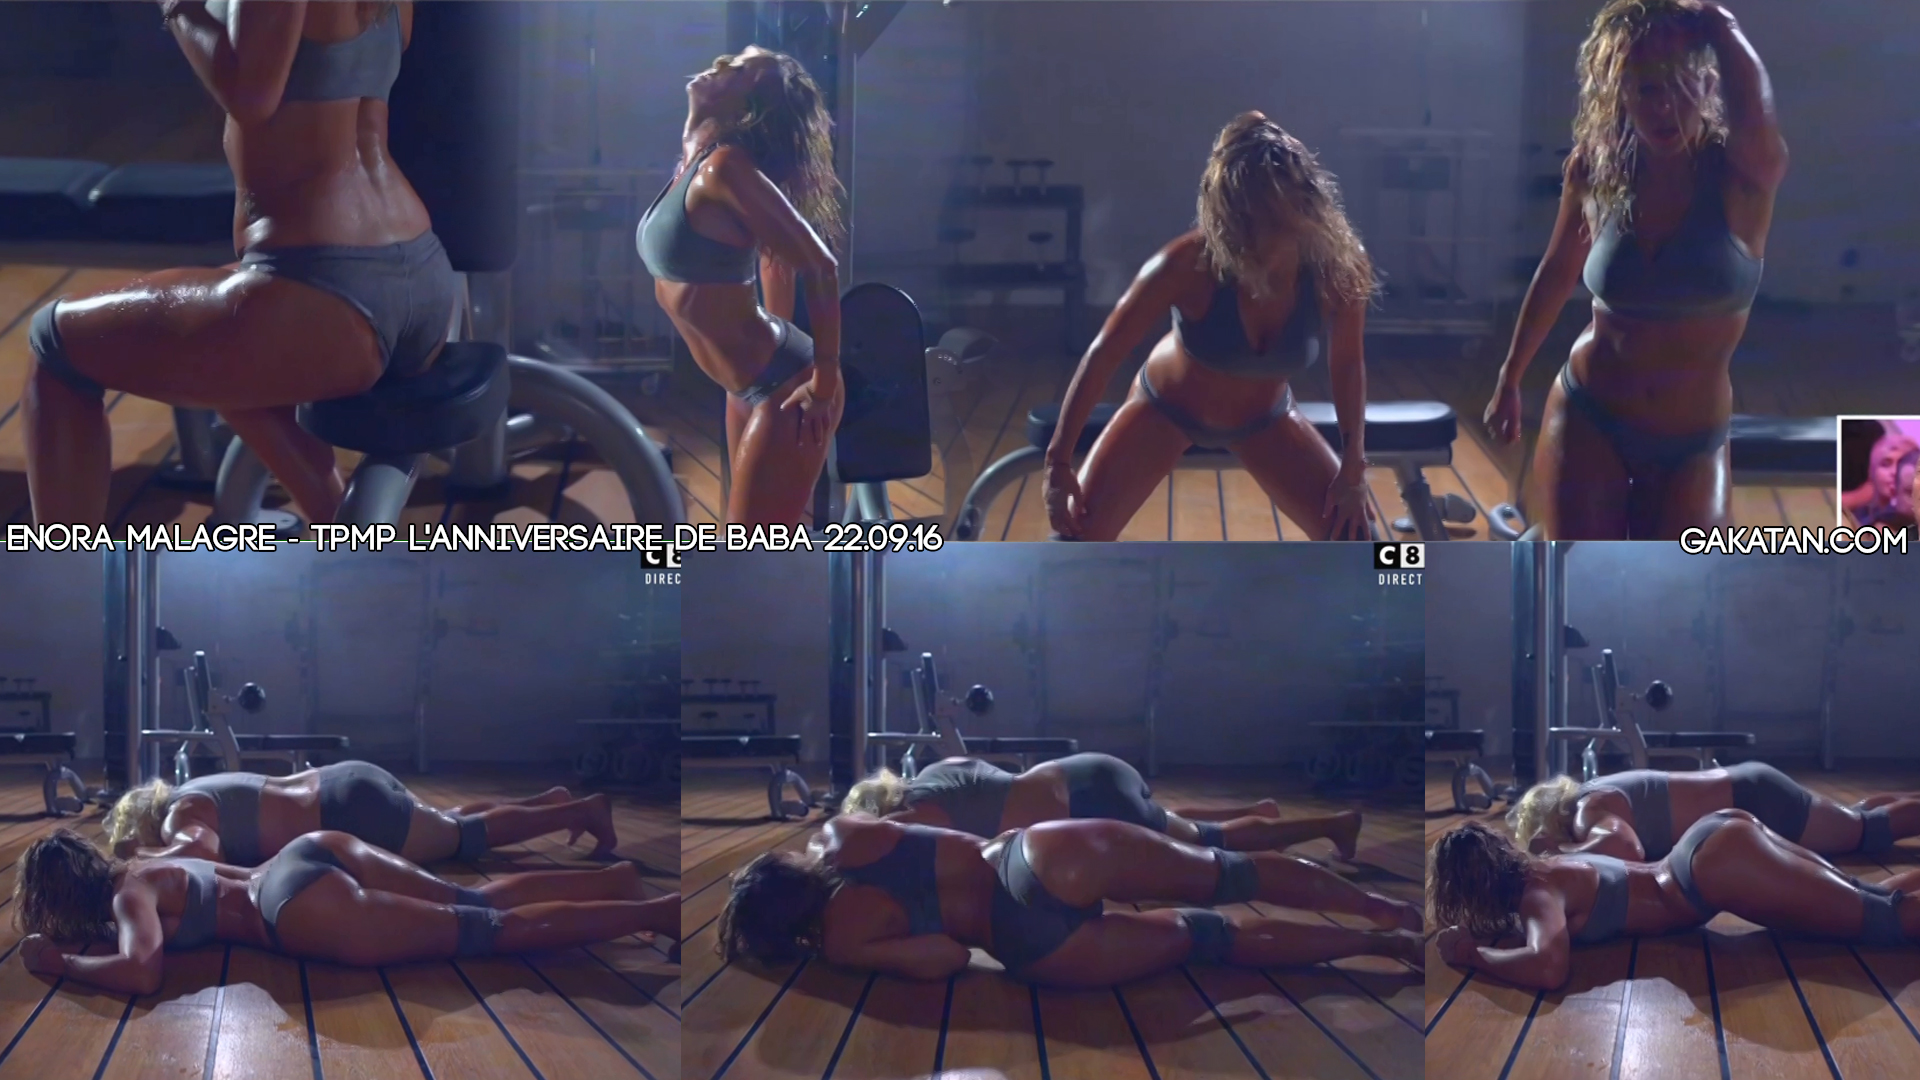 La Danse Sexy D Enora Malagré Pour L Anniversaire D Hanouna Video 1pic1day